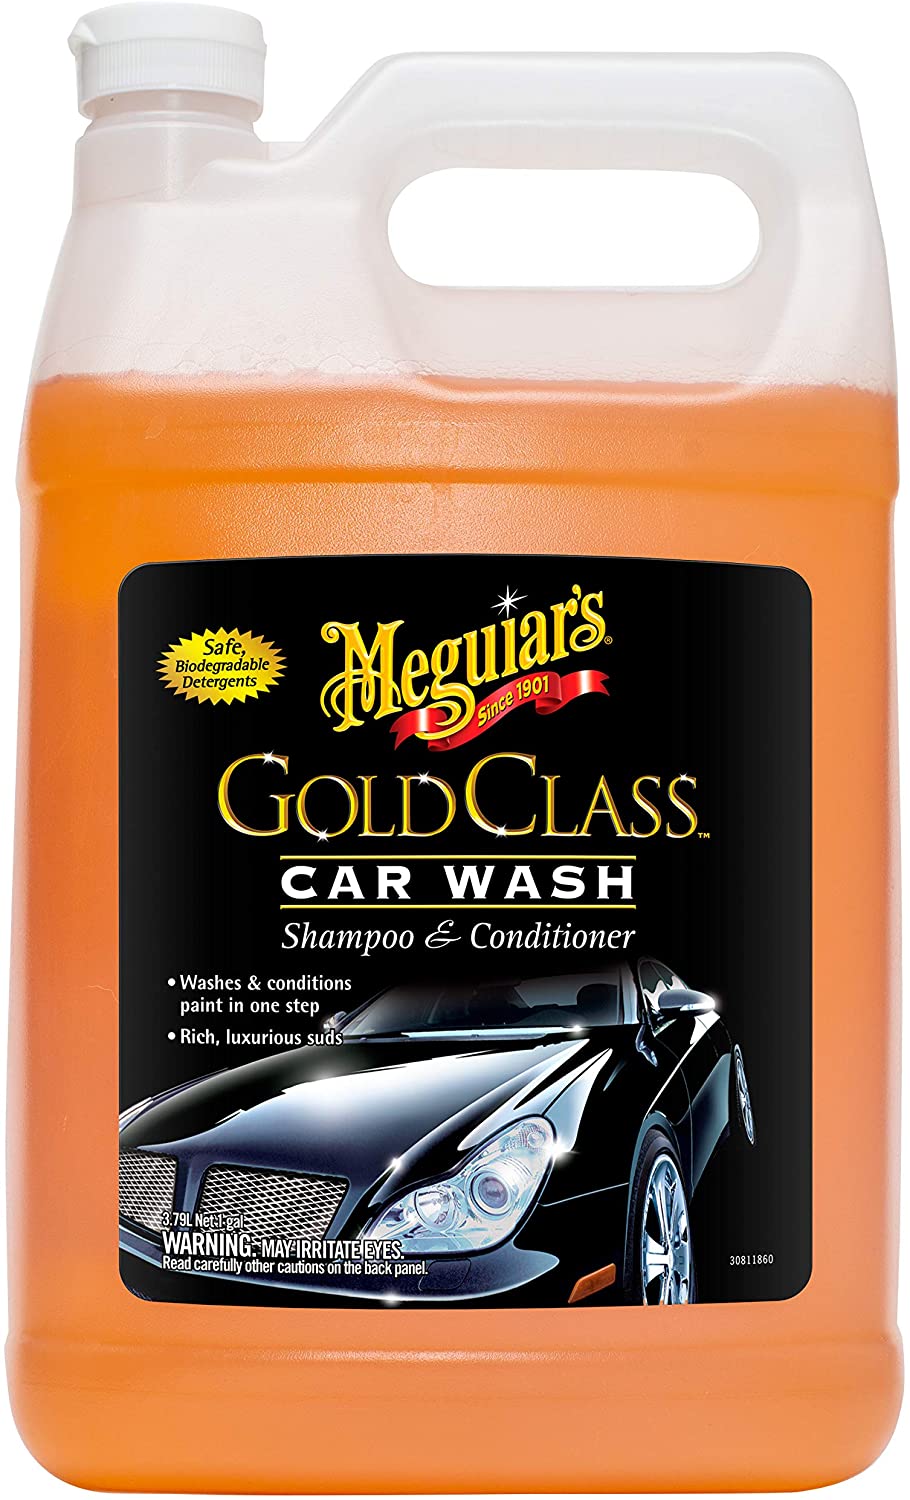 Meguiar's Gold Class Car Wash Shampoo and Conditioner - Mix & Match